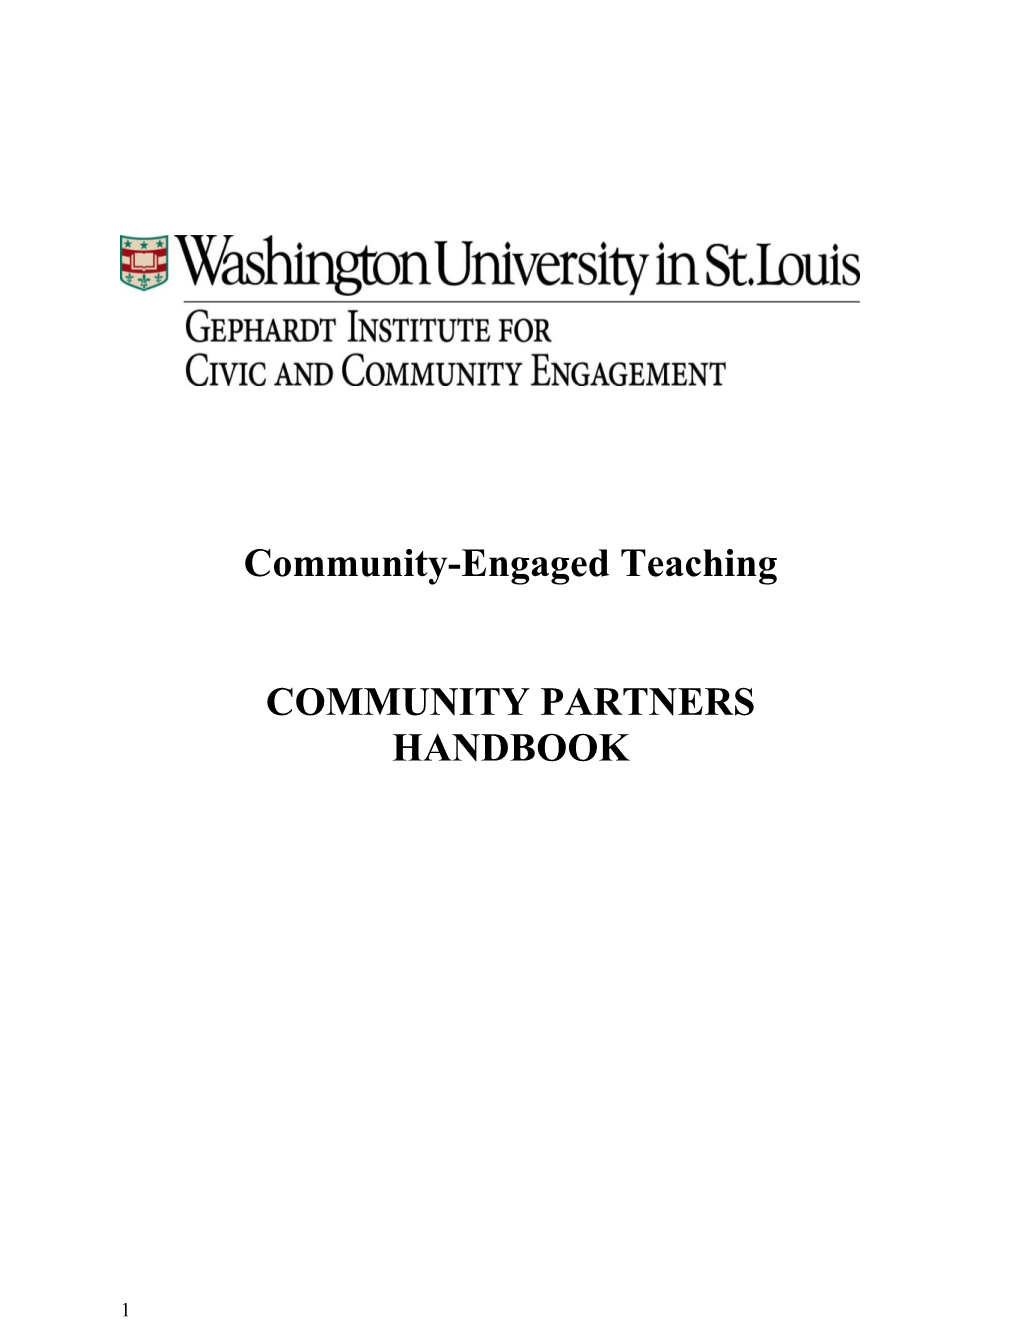 Community-Engaged Teaching